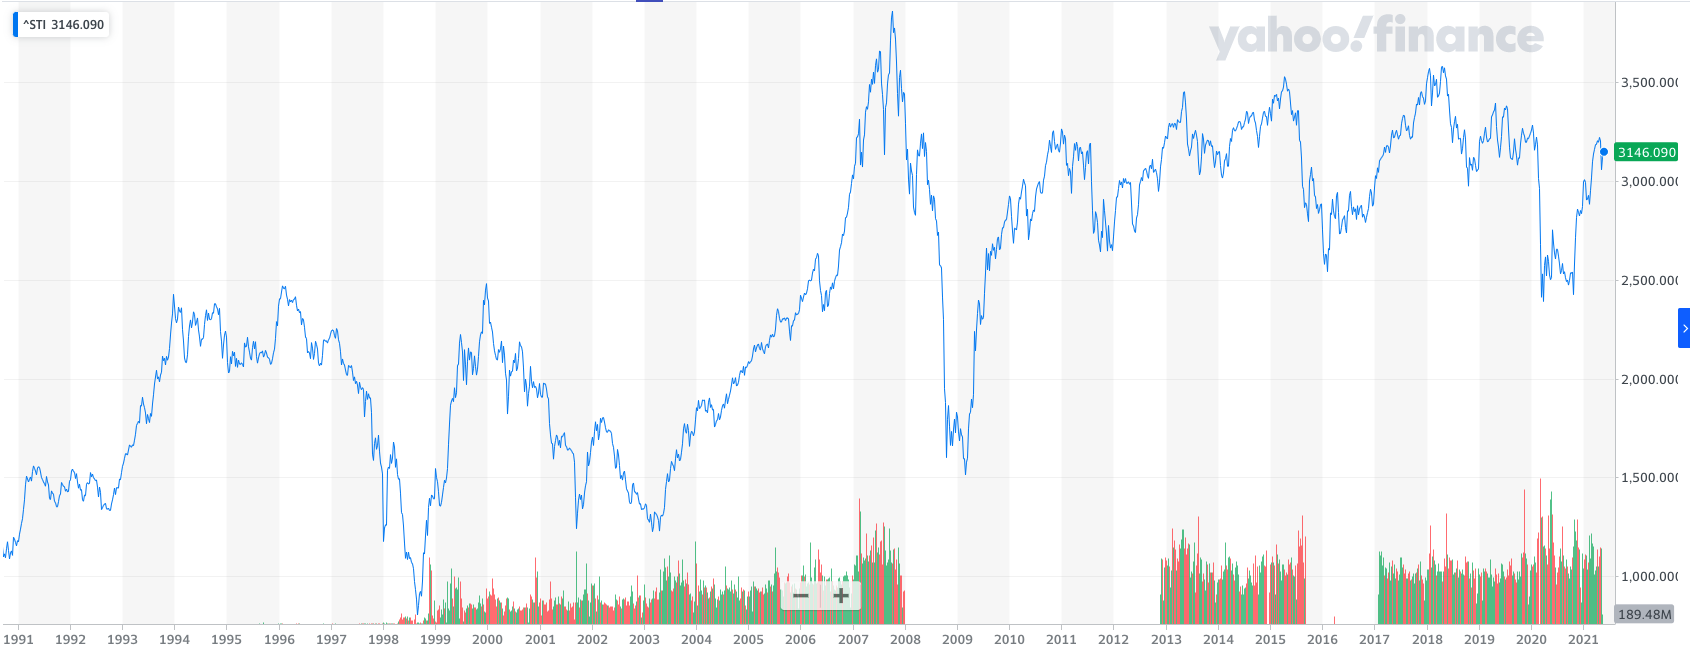 Straits Times Index historical performance, courtesy Yahoo! Finance